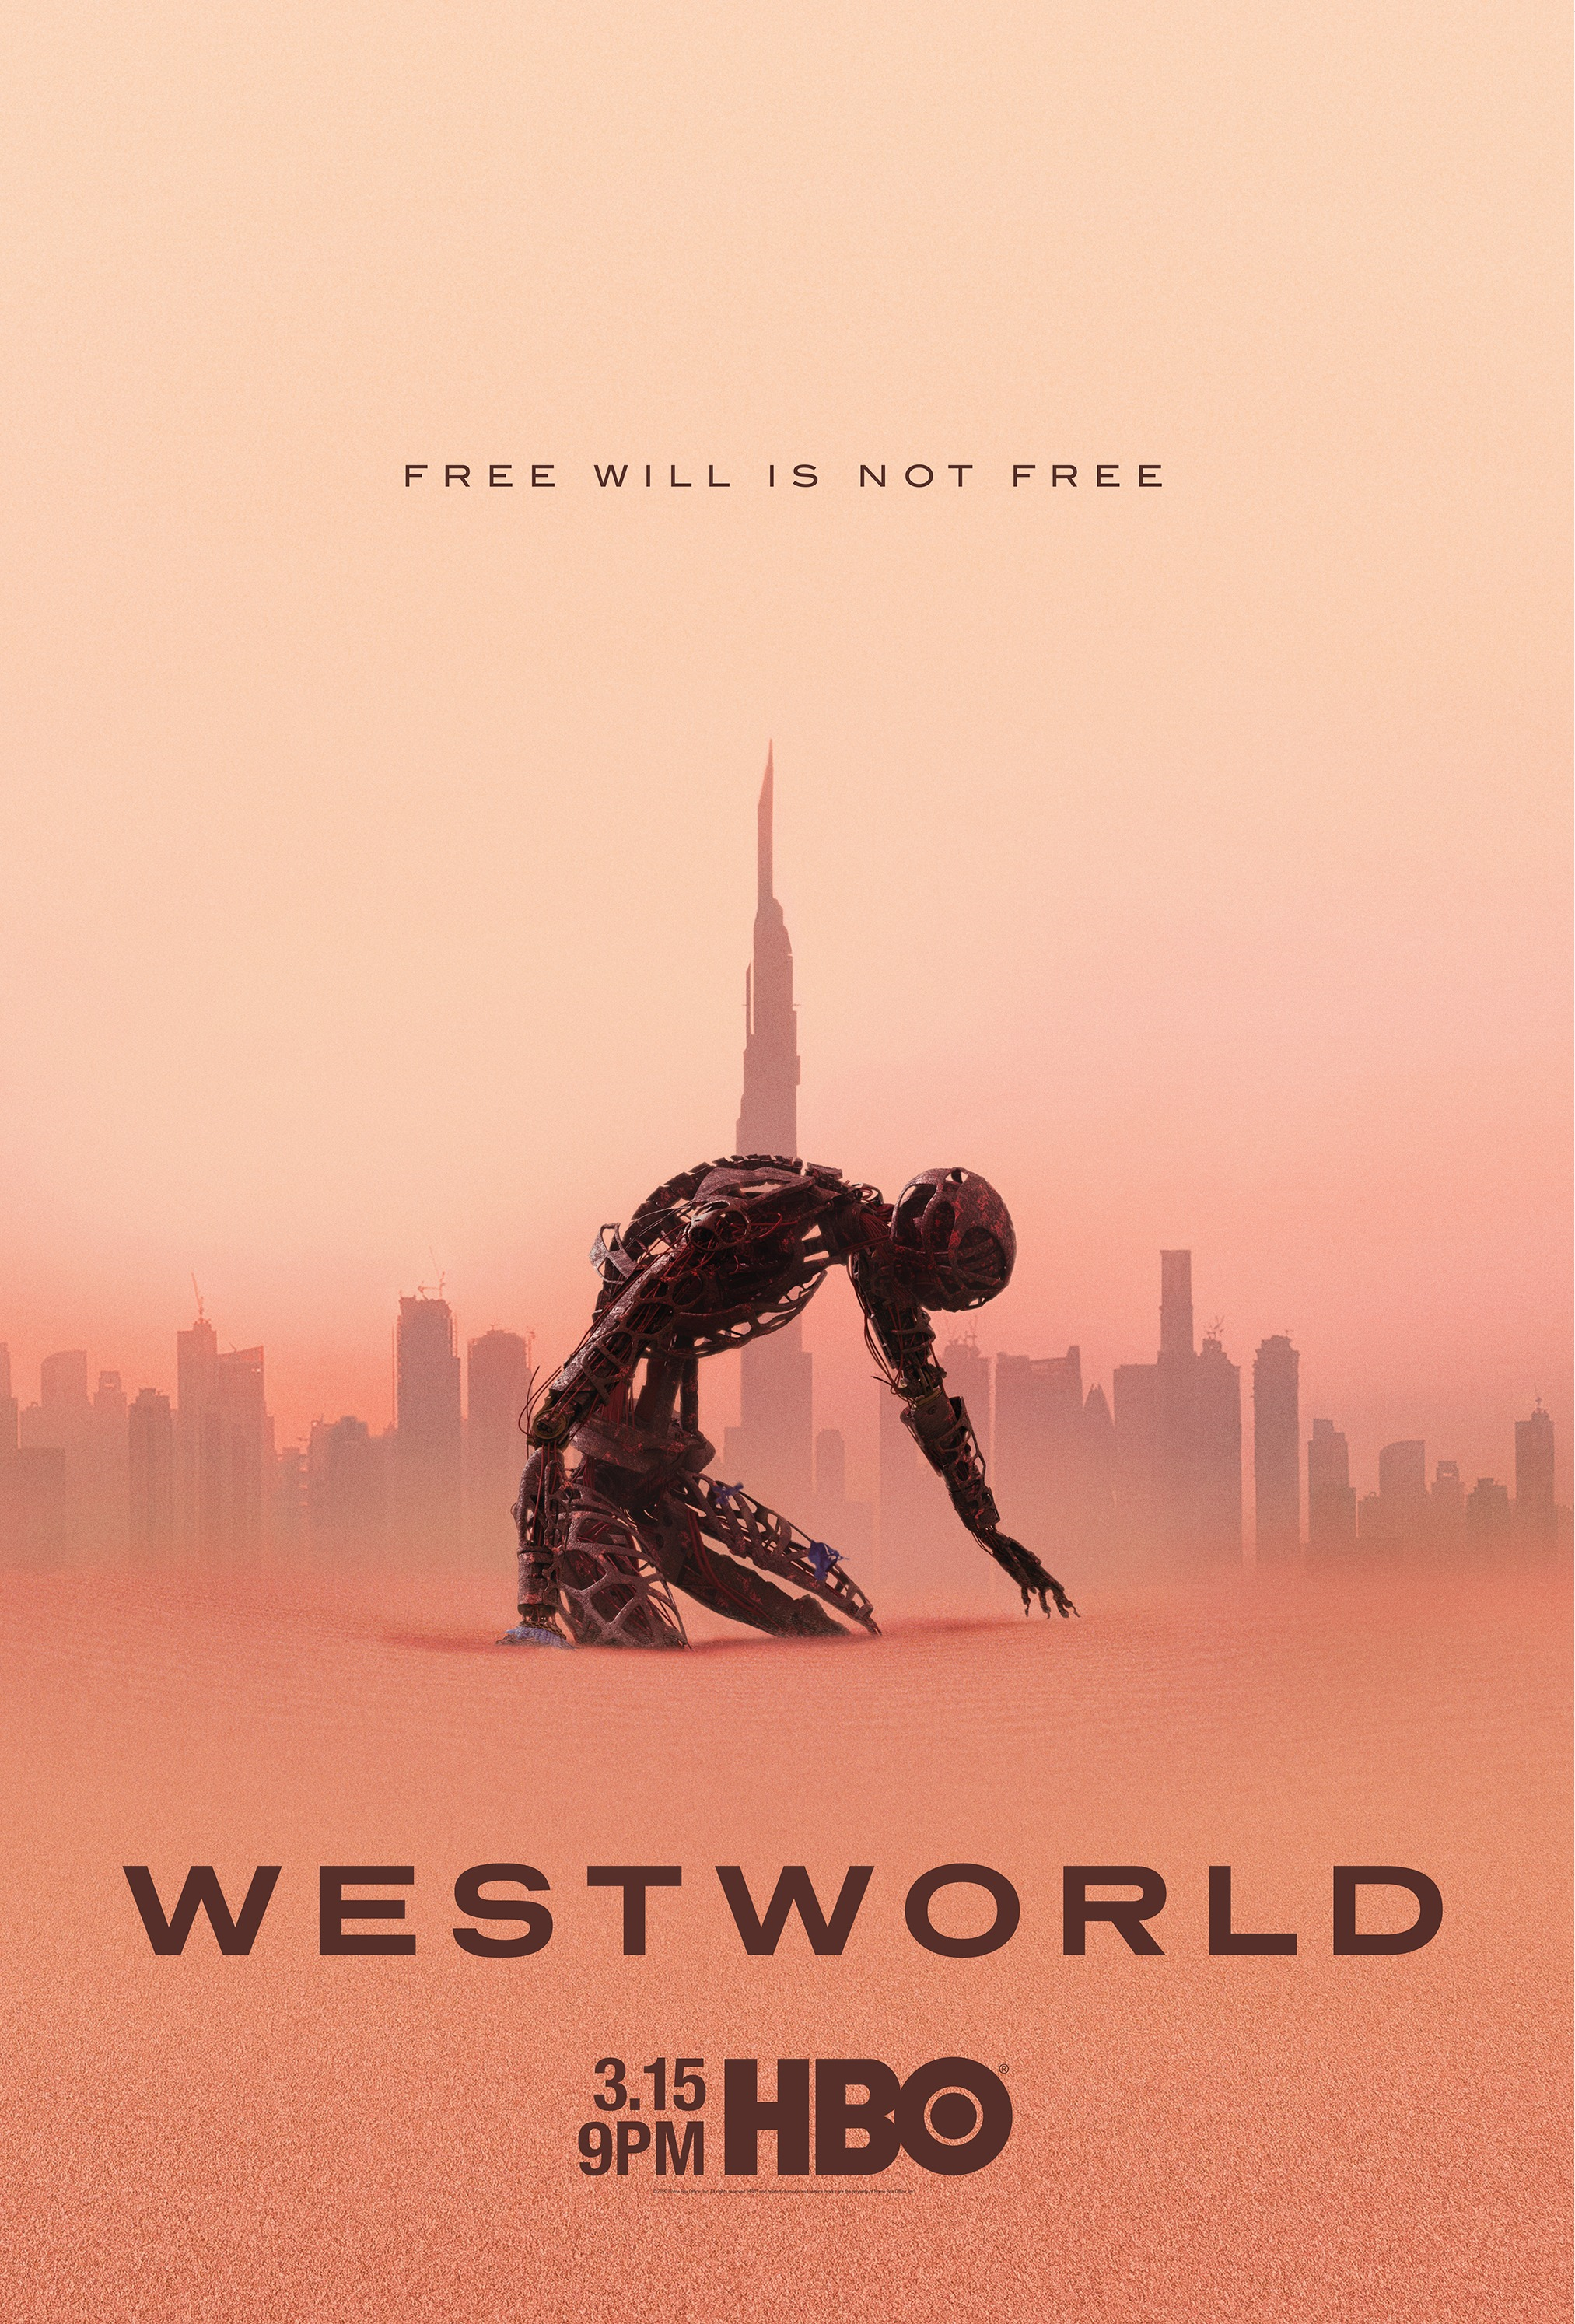 westworld season 1 ending